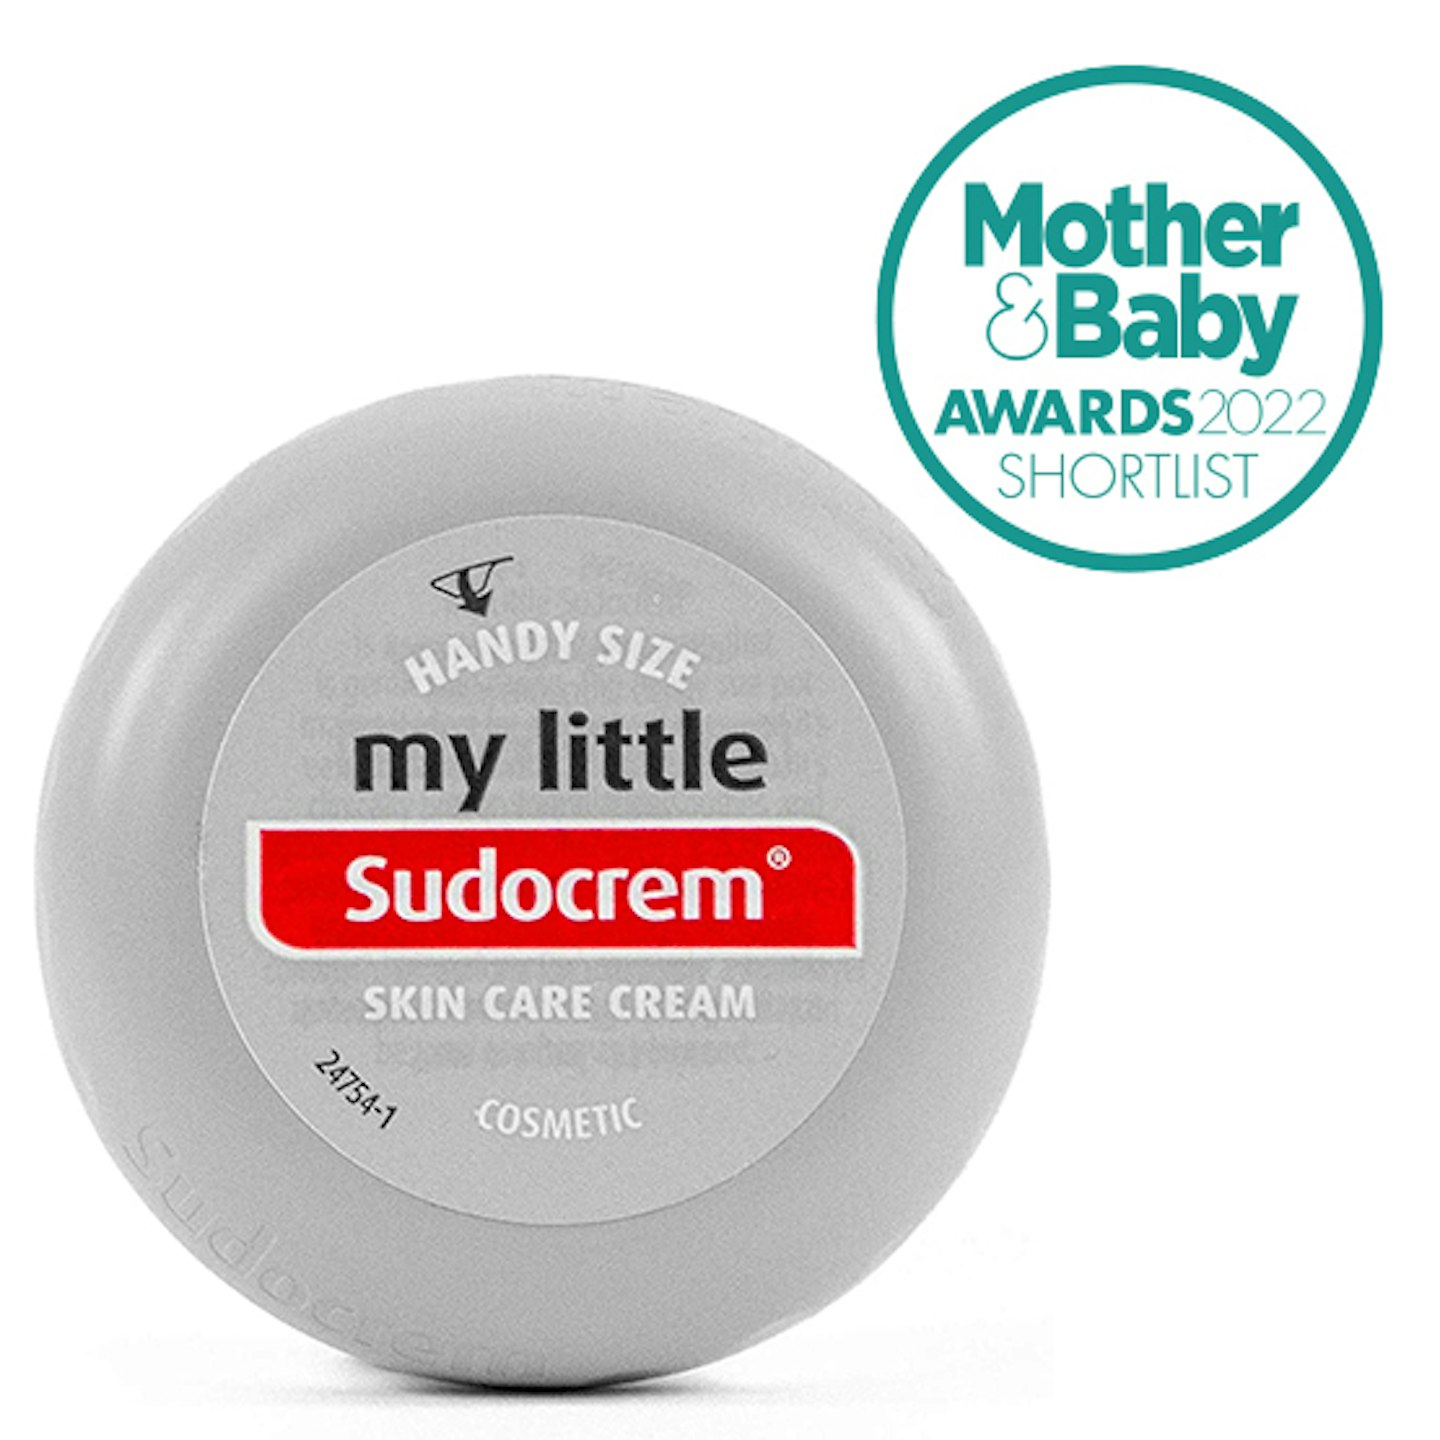 My little Sudocrem